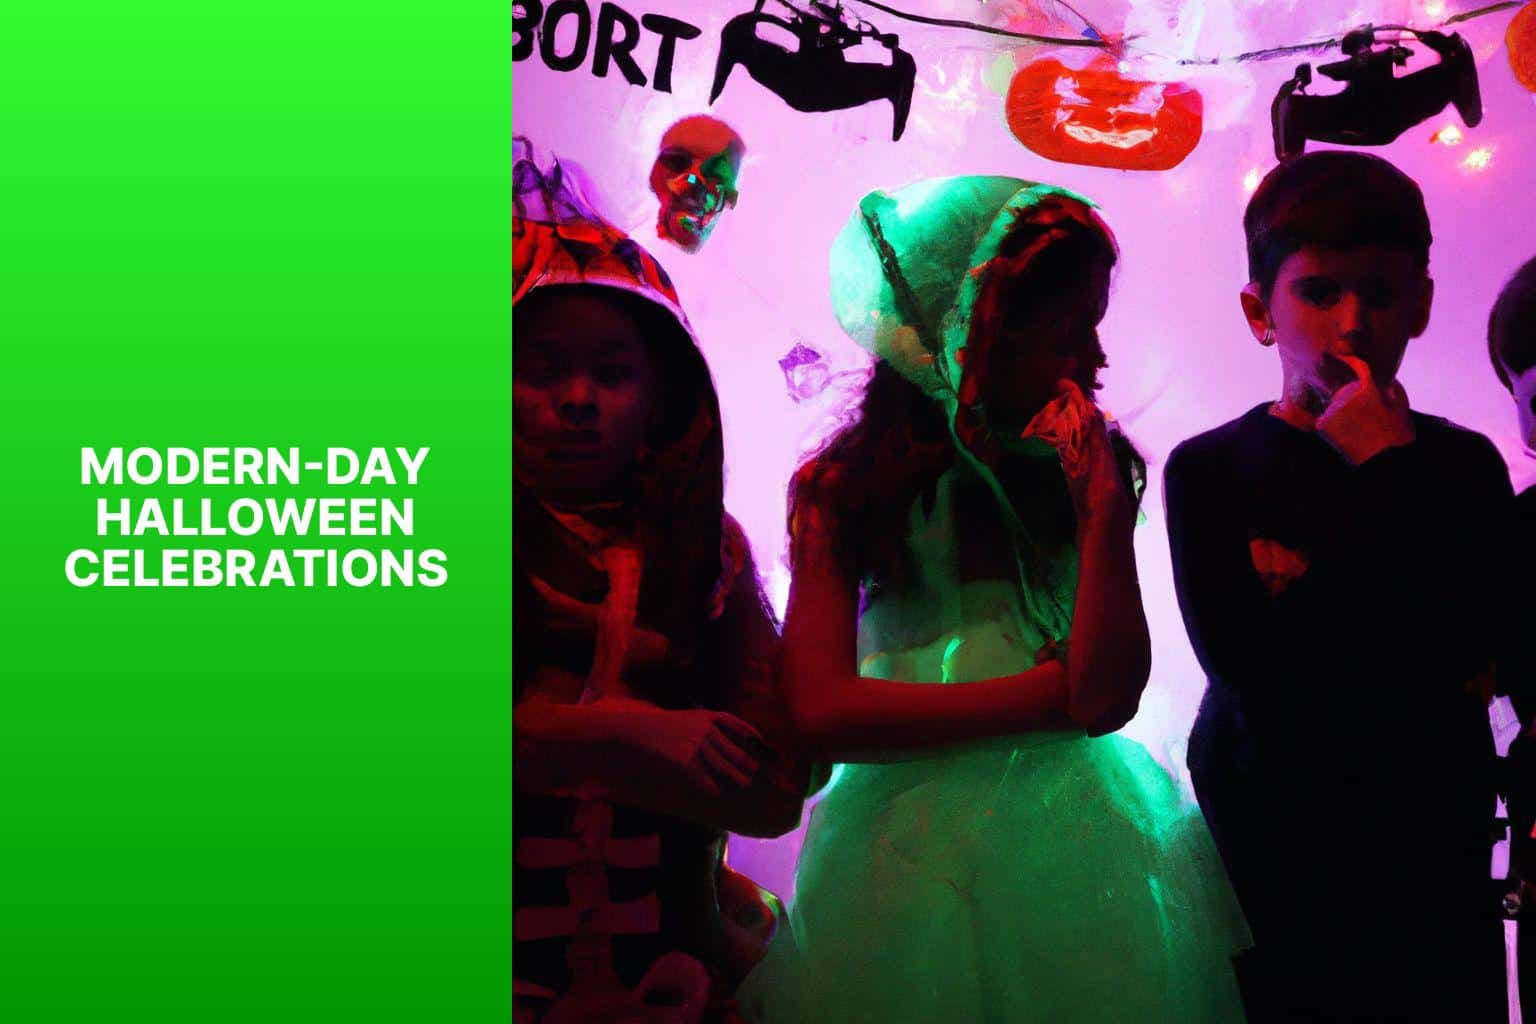 Modern-Day Halloween Celebrations - what